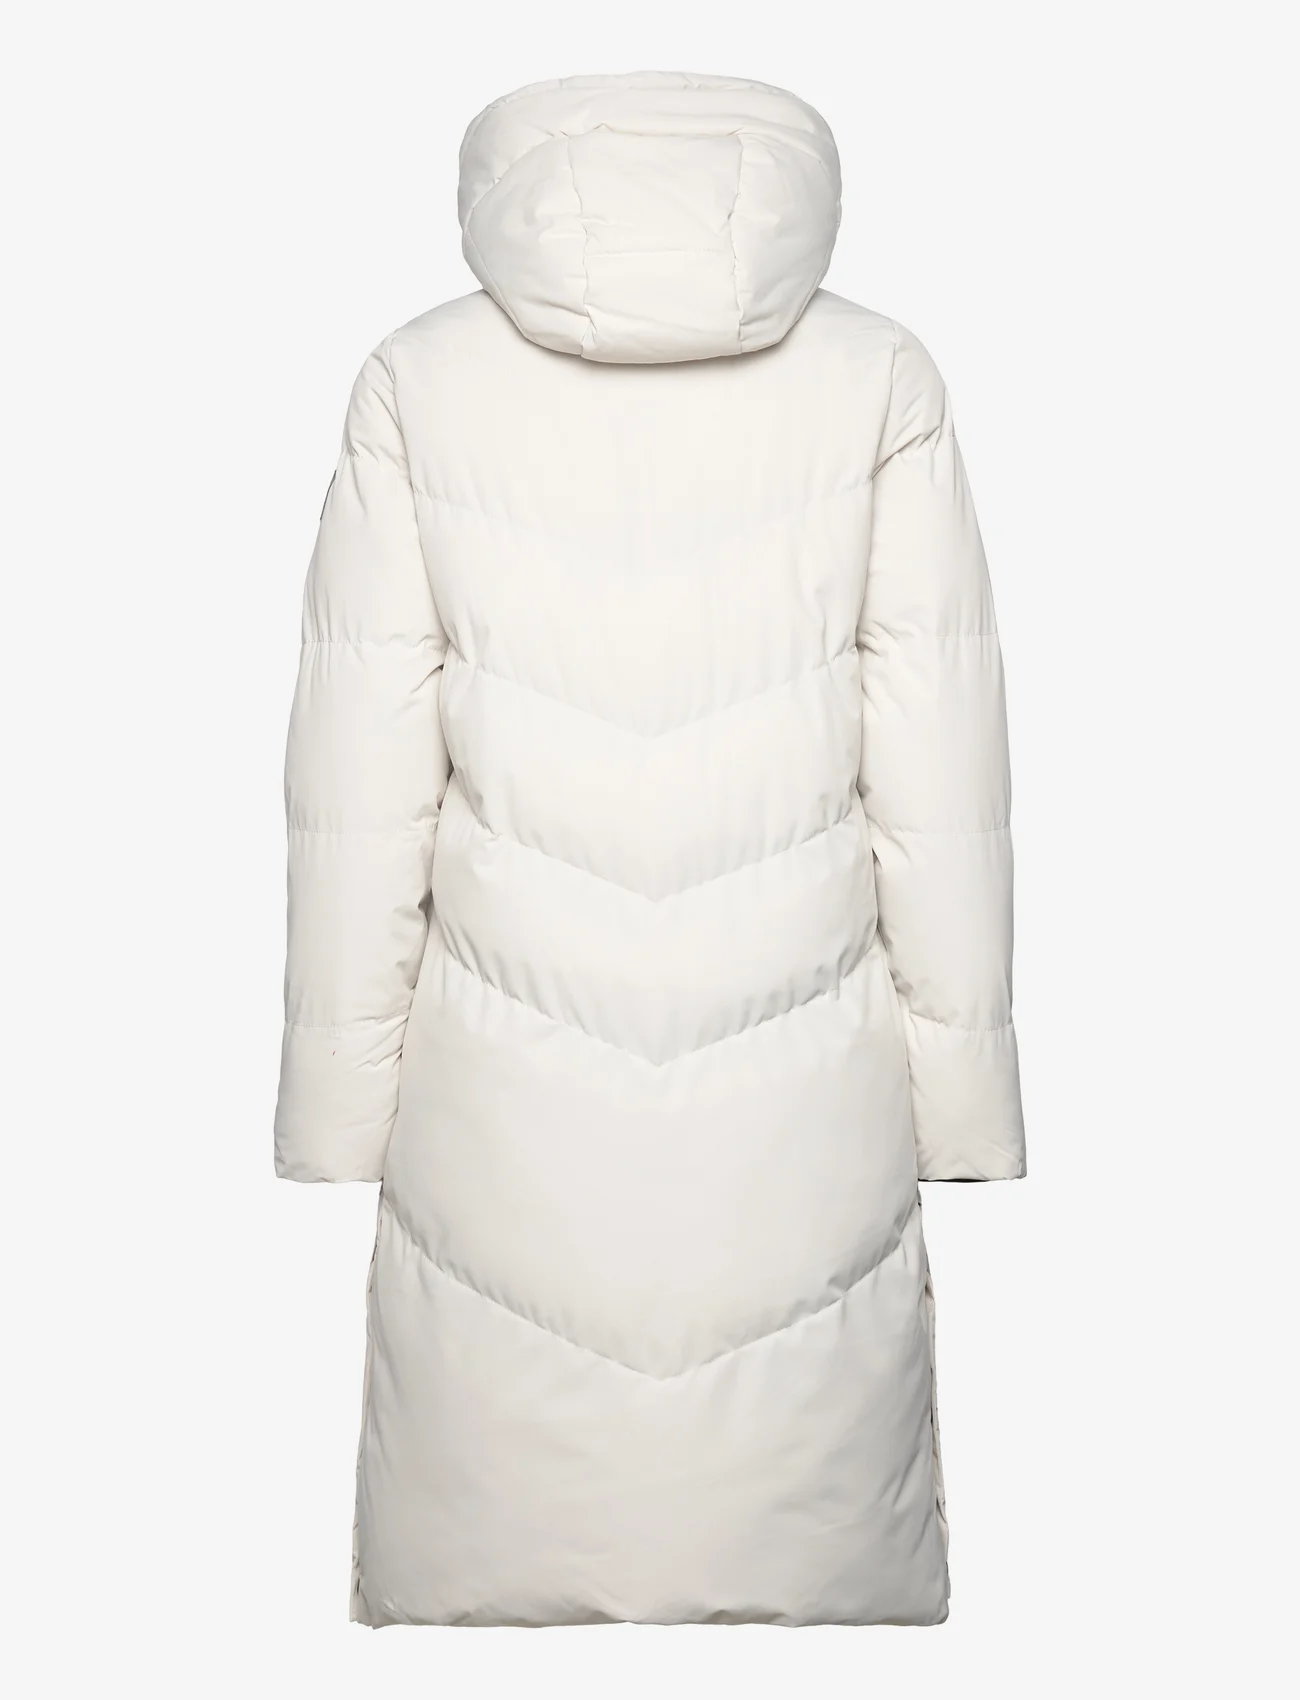 Garcia - ladies outdoor jackets - winter jackets - cream - 1